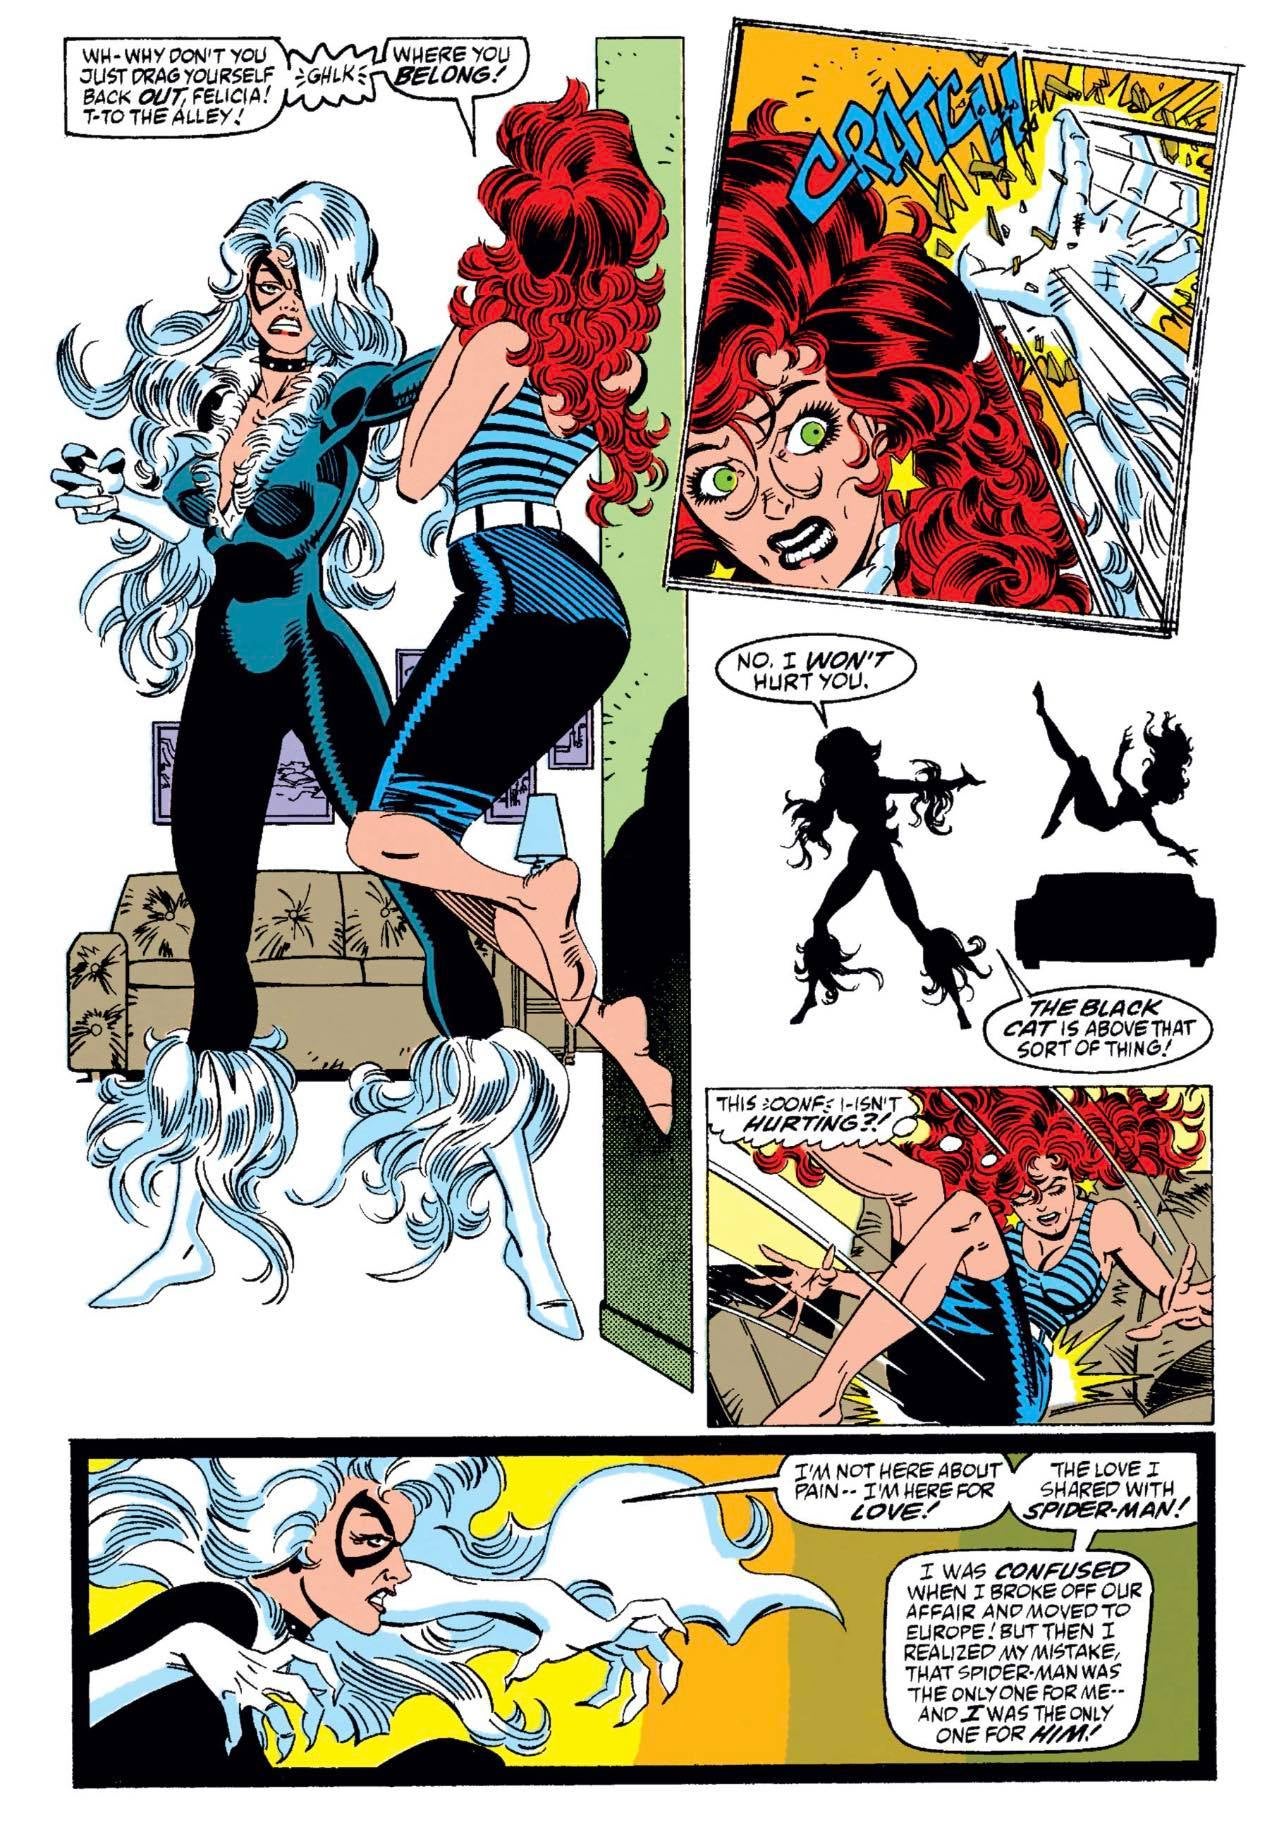 Black Cat attacks Mary Jane in Amazing Spider-Man #331 (art by Erik Larsen)